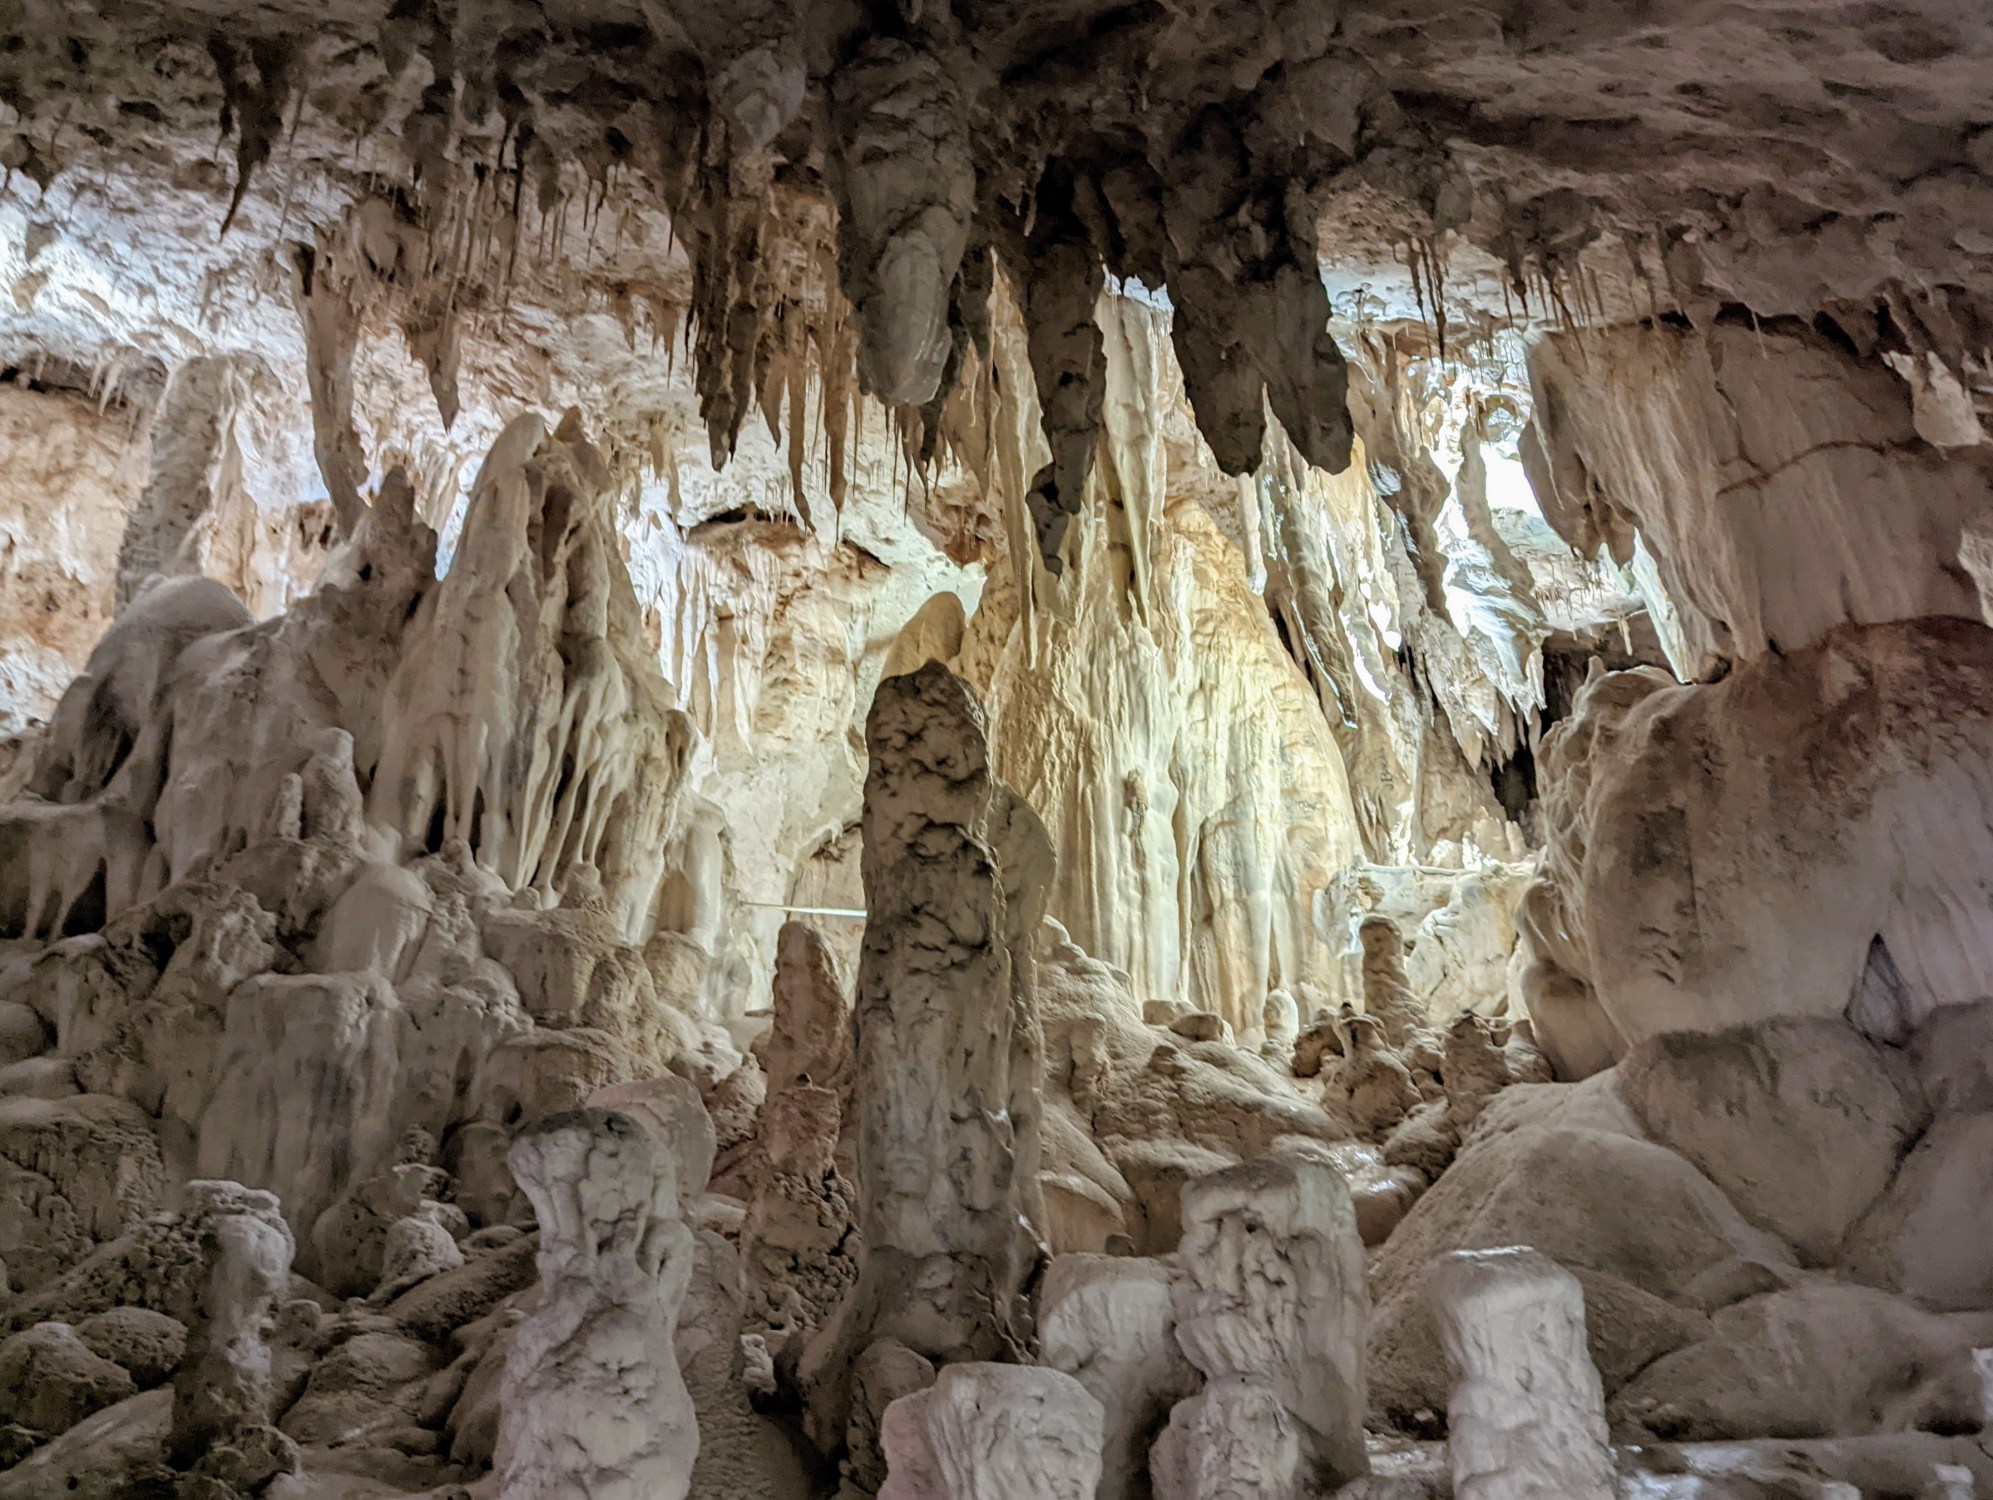 Yarrangobilly Caves + Thermal Pool